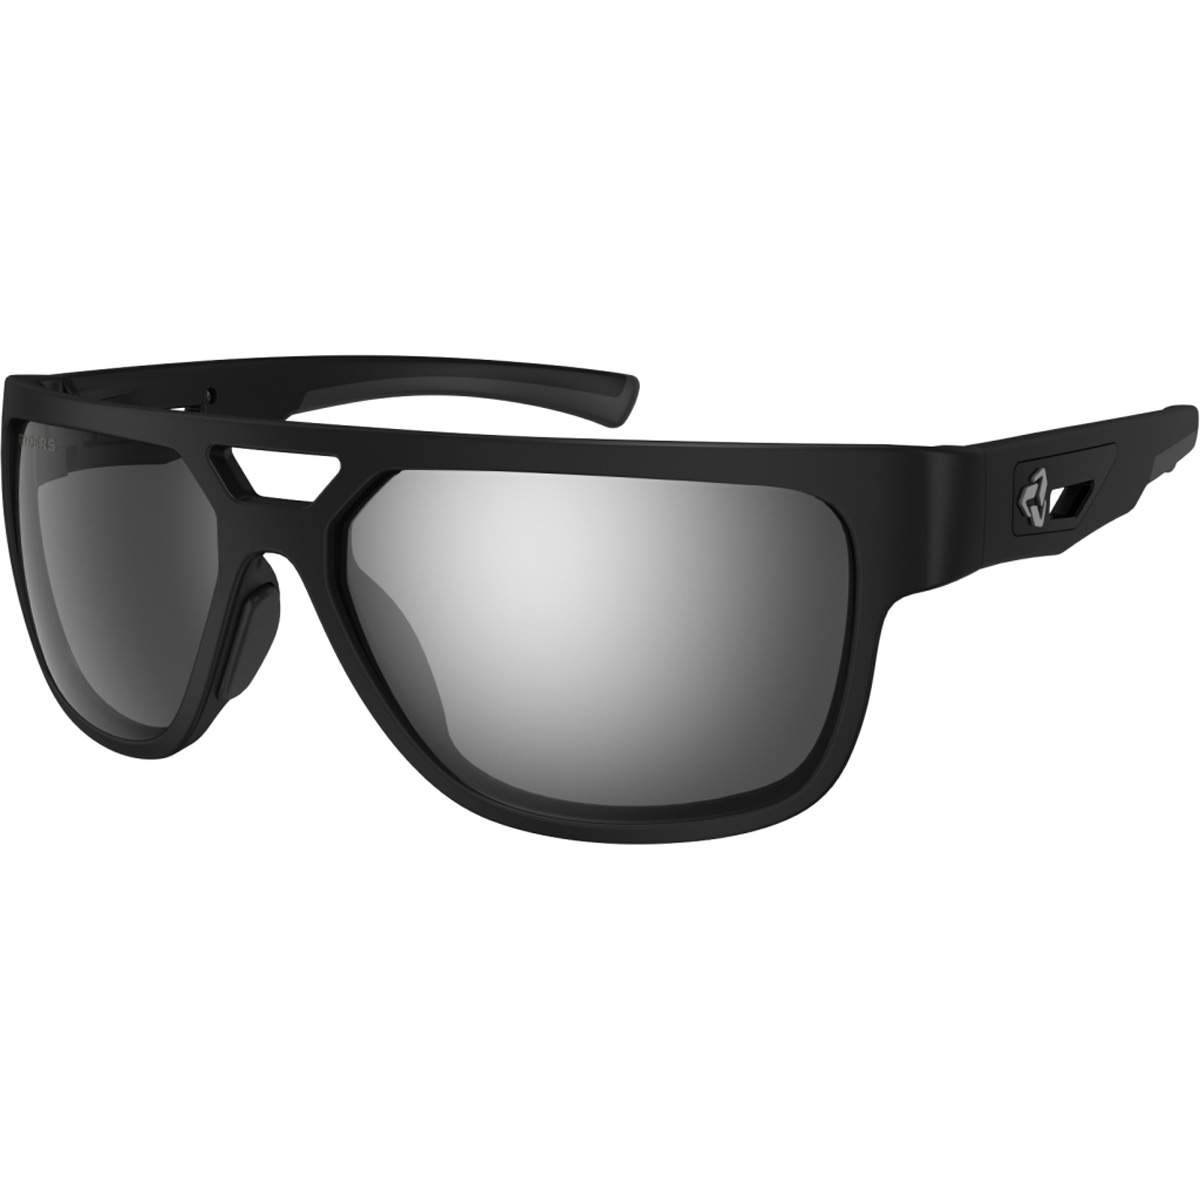 Ryders Eyewear Cakewalk Polarized Sunglasses (BLACK / GREY LENS SILVER FM ) - image 1 of 1